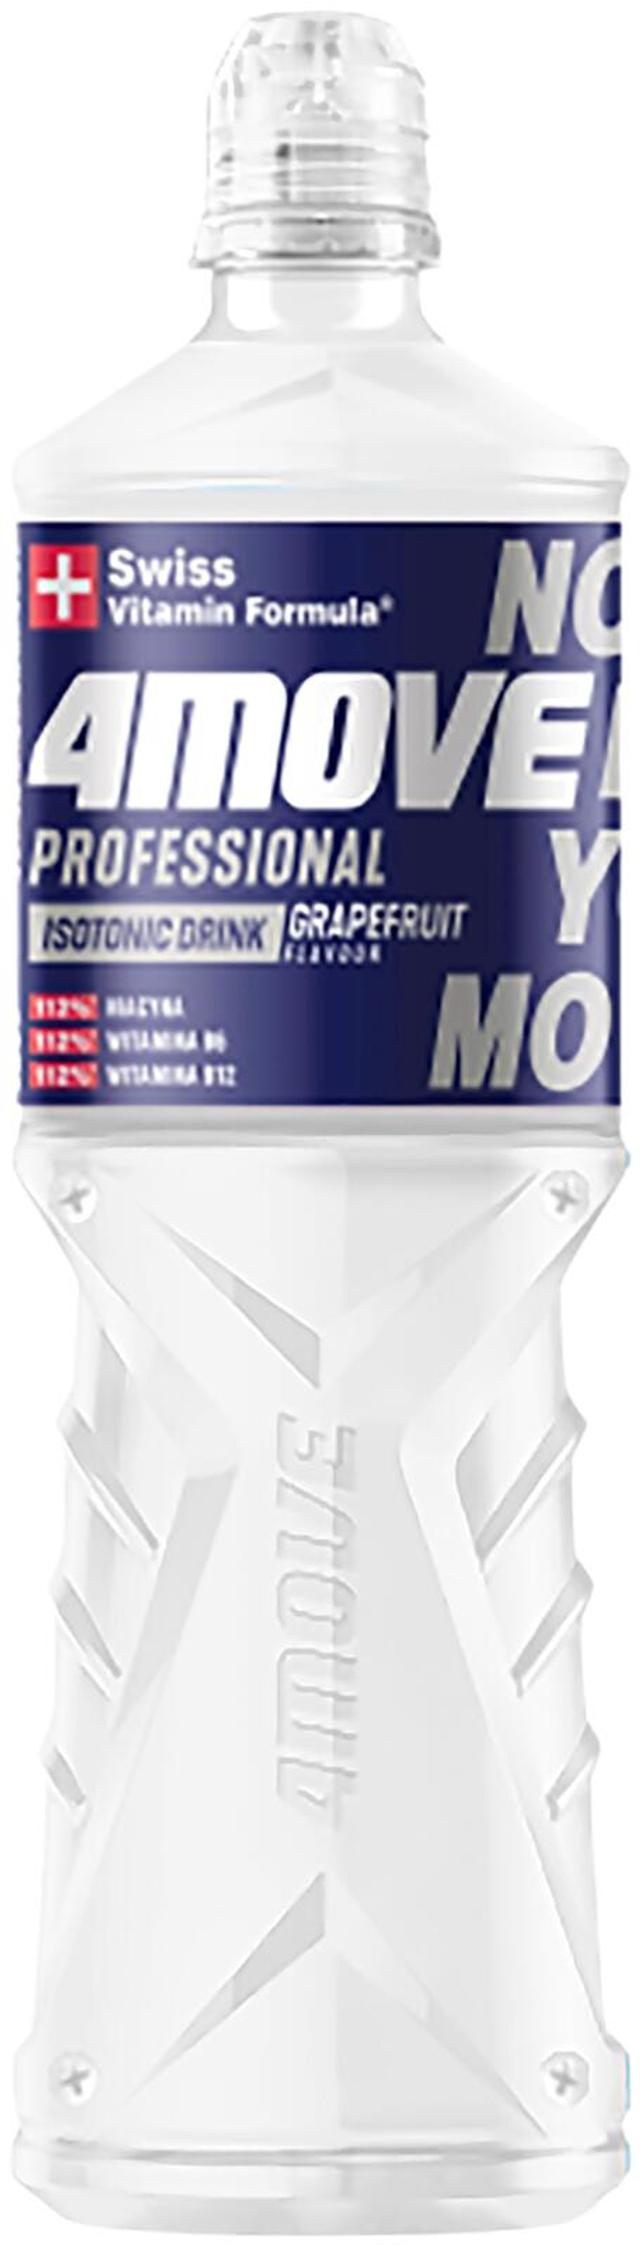 4MOVE Professional Zero Sugar Grapefruit 0,75l PET